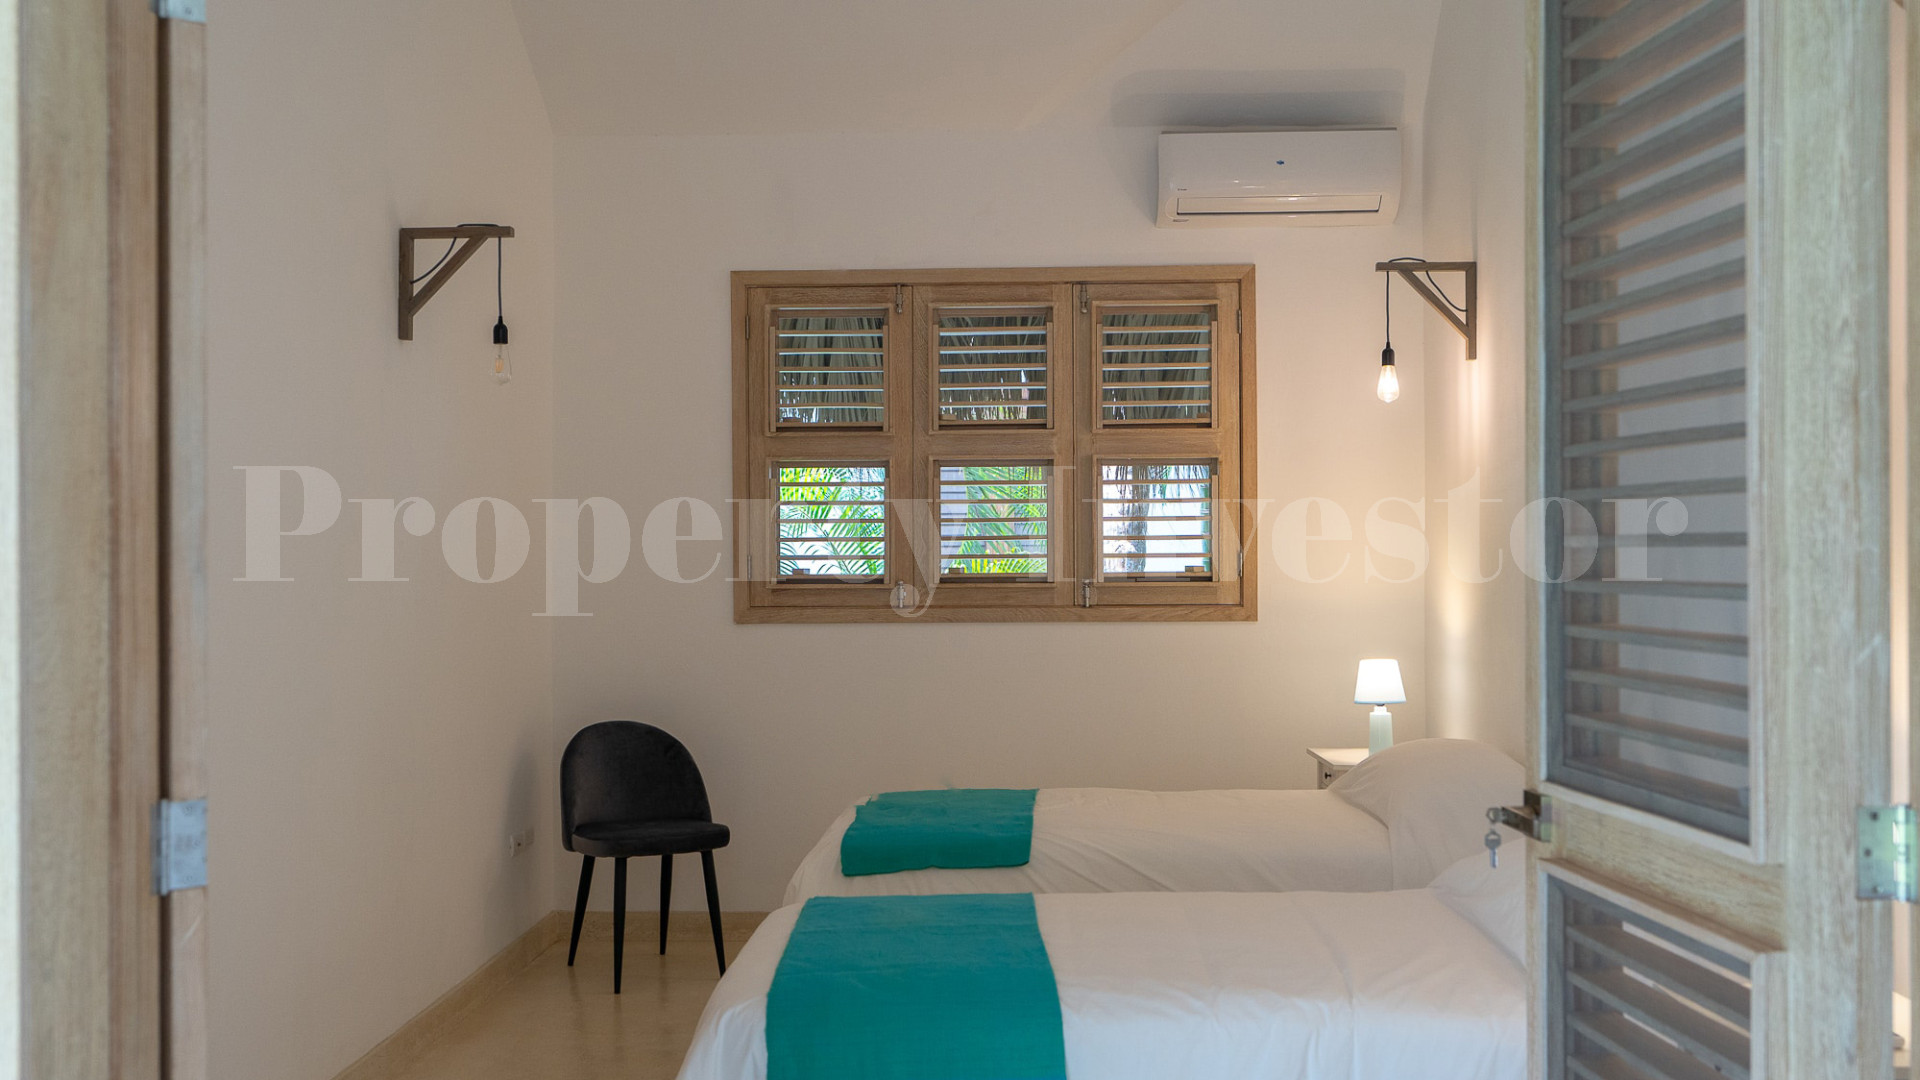 Beautiful 5 Bedroom Luxury Beachfront Villa for Sale at Playa Coson, Las Terrenas